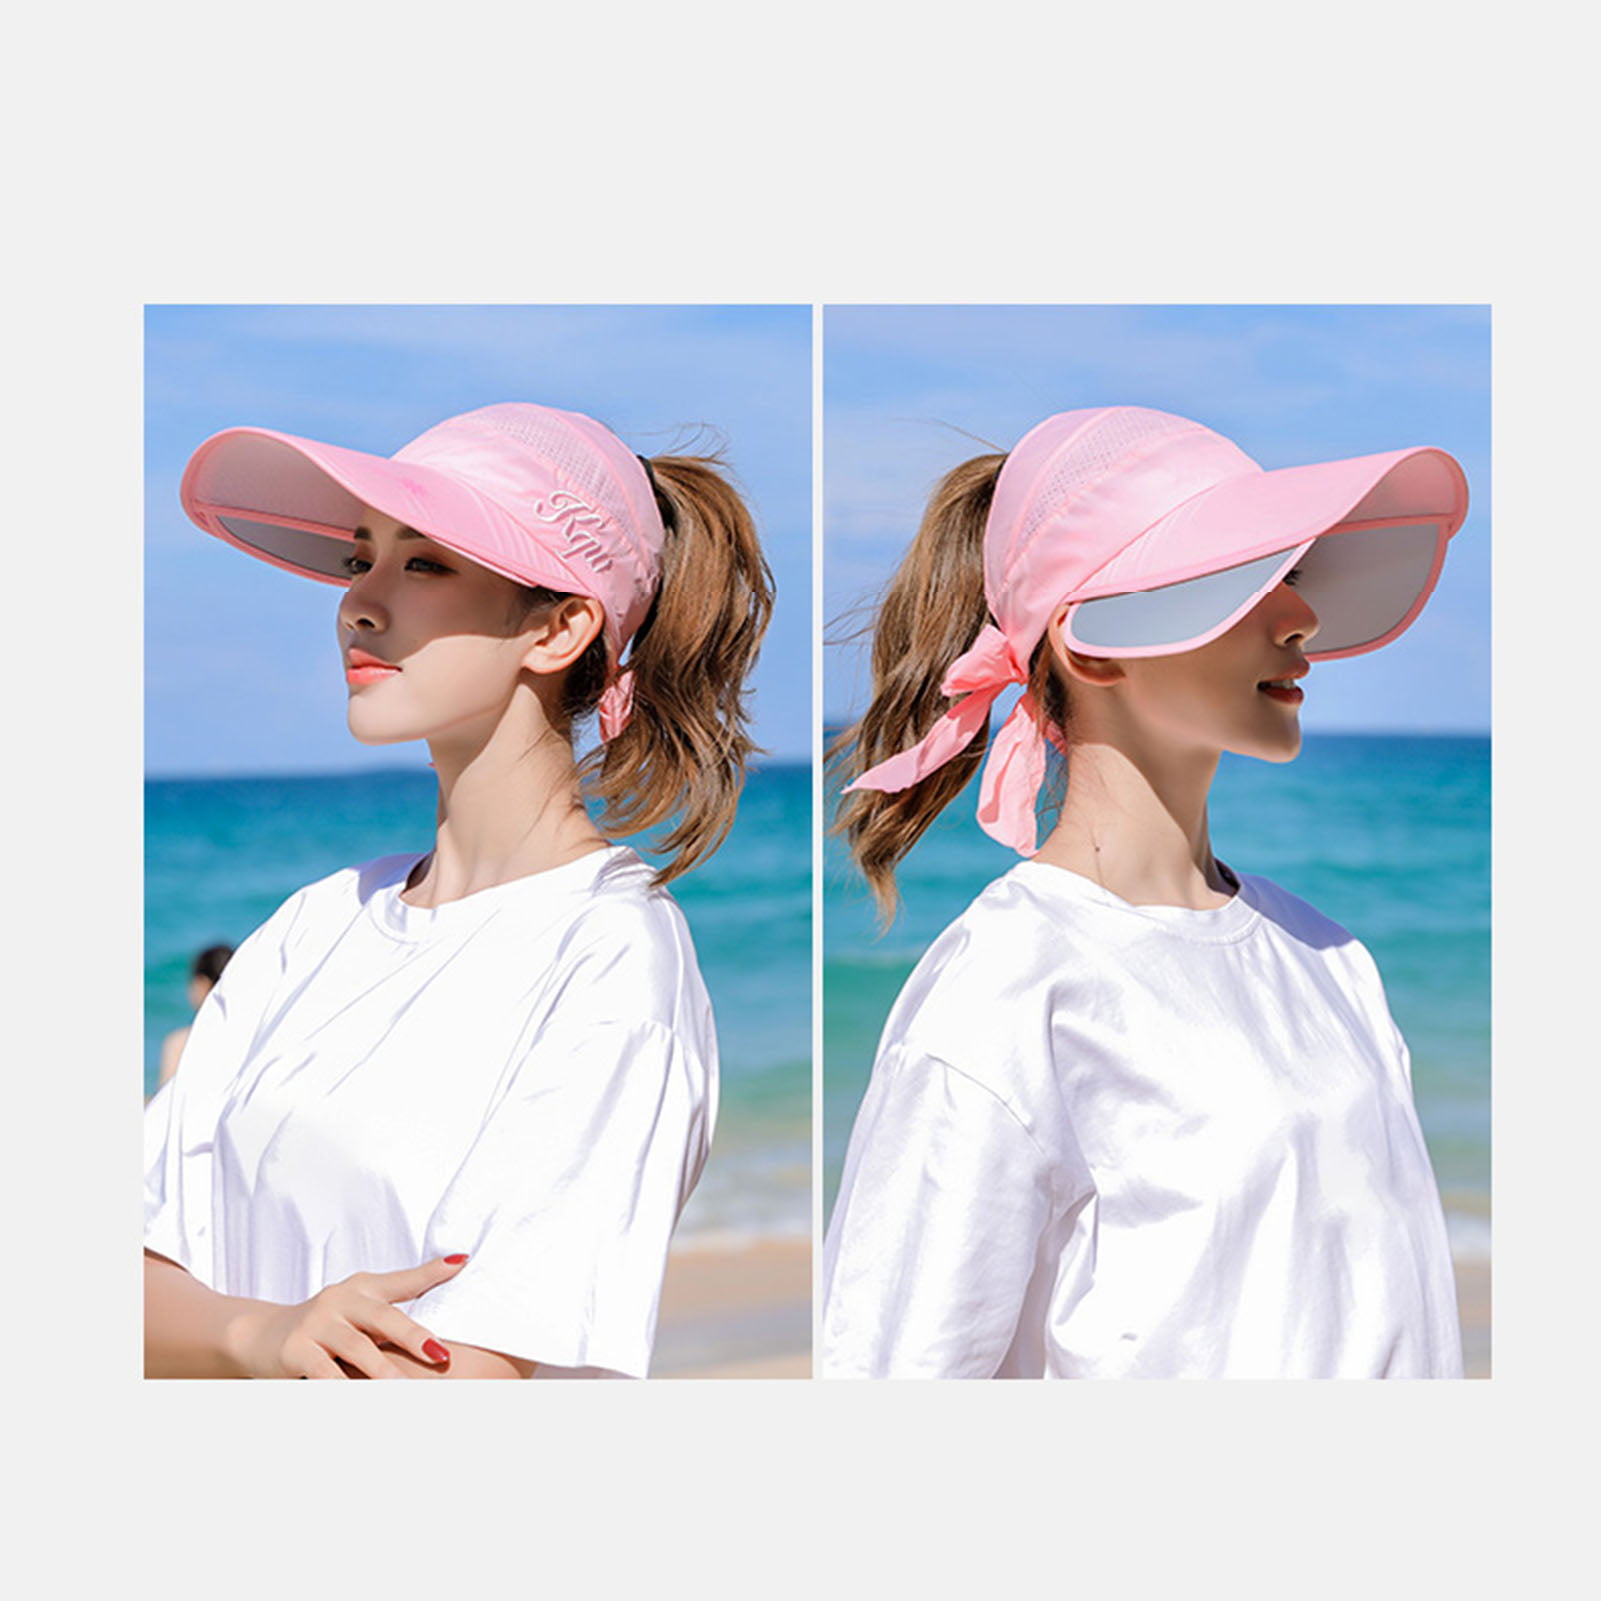 Peicees Wide Brim Visor Hat for Women Golf Visor Cap Sun Protection Hat for Beach Garden Tennis Running Sunshade Hat Pure Blue